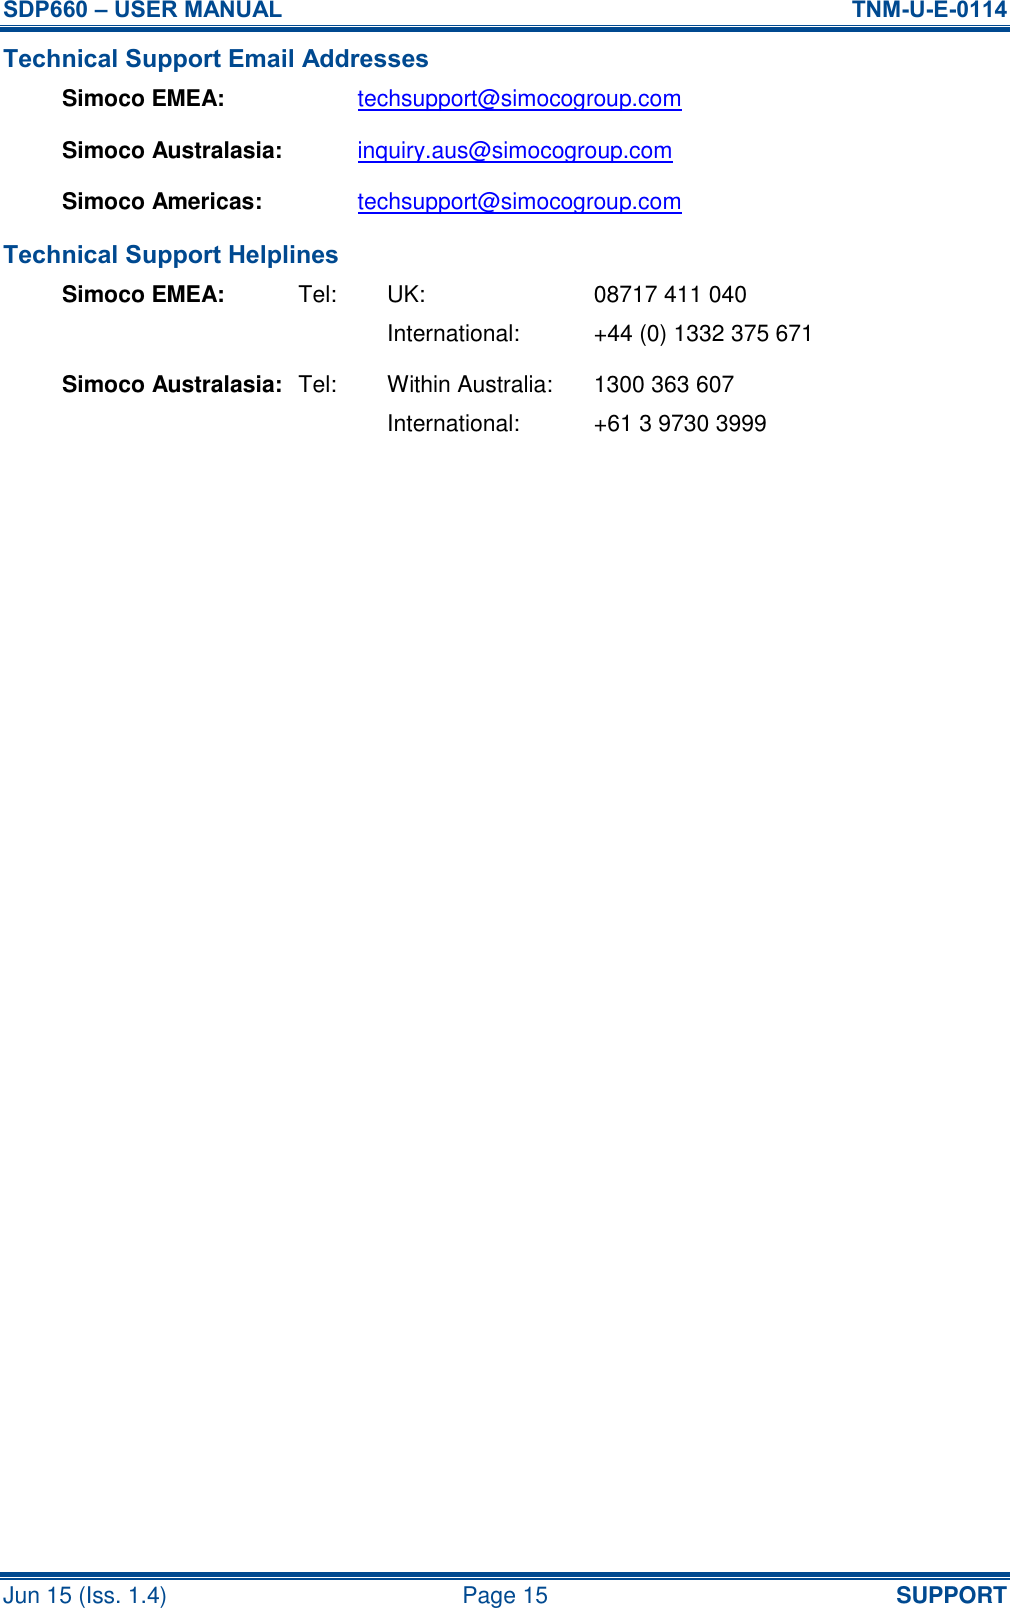 SDP660 – USER MANUAL  TNM-U-E-0114 Jun 15 (Iss. 1.4)  Page 15 SUPPORT Technical Support Email Addresses Simoco EMEA: techsupport@simocogroup.com Simoco Australasia: inquiry.aus@simocogroup.com Simoco Americas: techsupport@simocogroup.com Technical Support Helplines Simoco EMEA:  Tel:  UK:  08717 411 040     International:  +44 (0) 1332 375 671 Simoco Australasia:  Tel:  Within Australia:  1300 363 607     International:  +61 3 9730 3999   